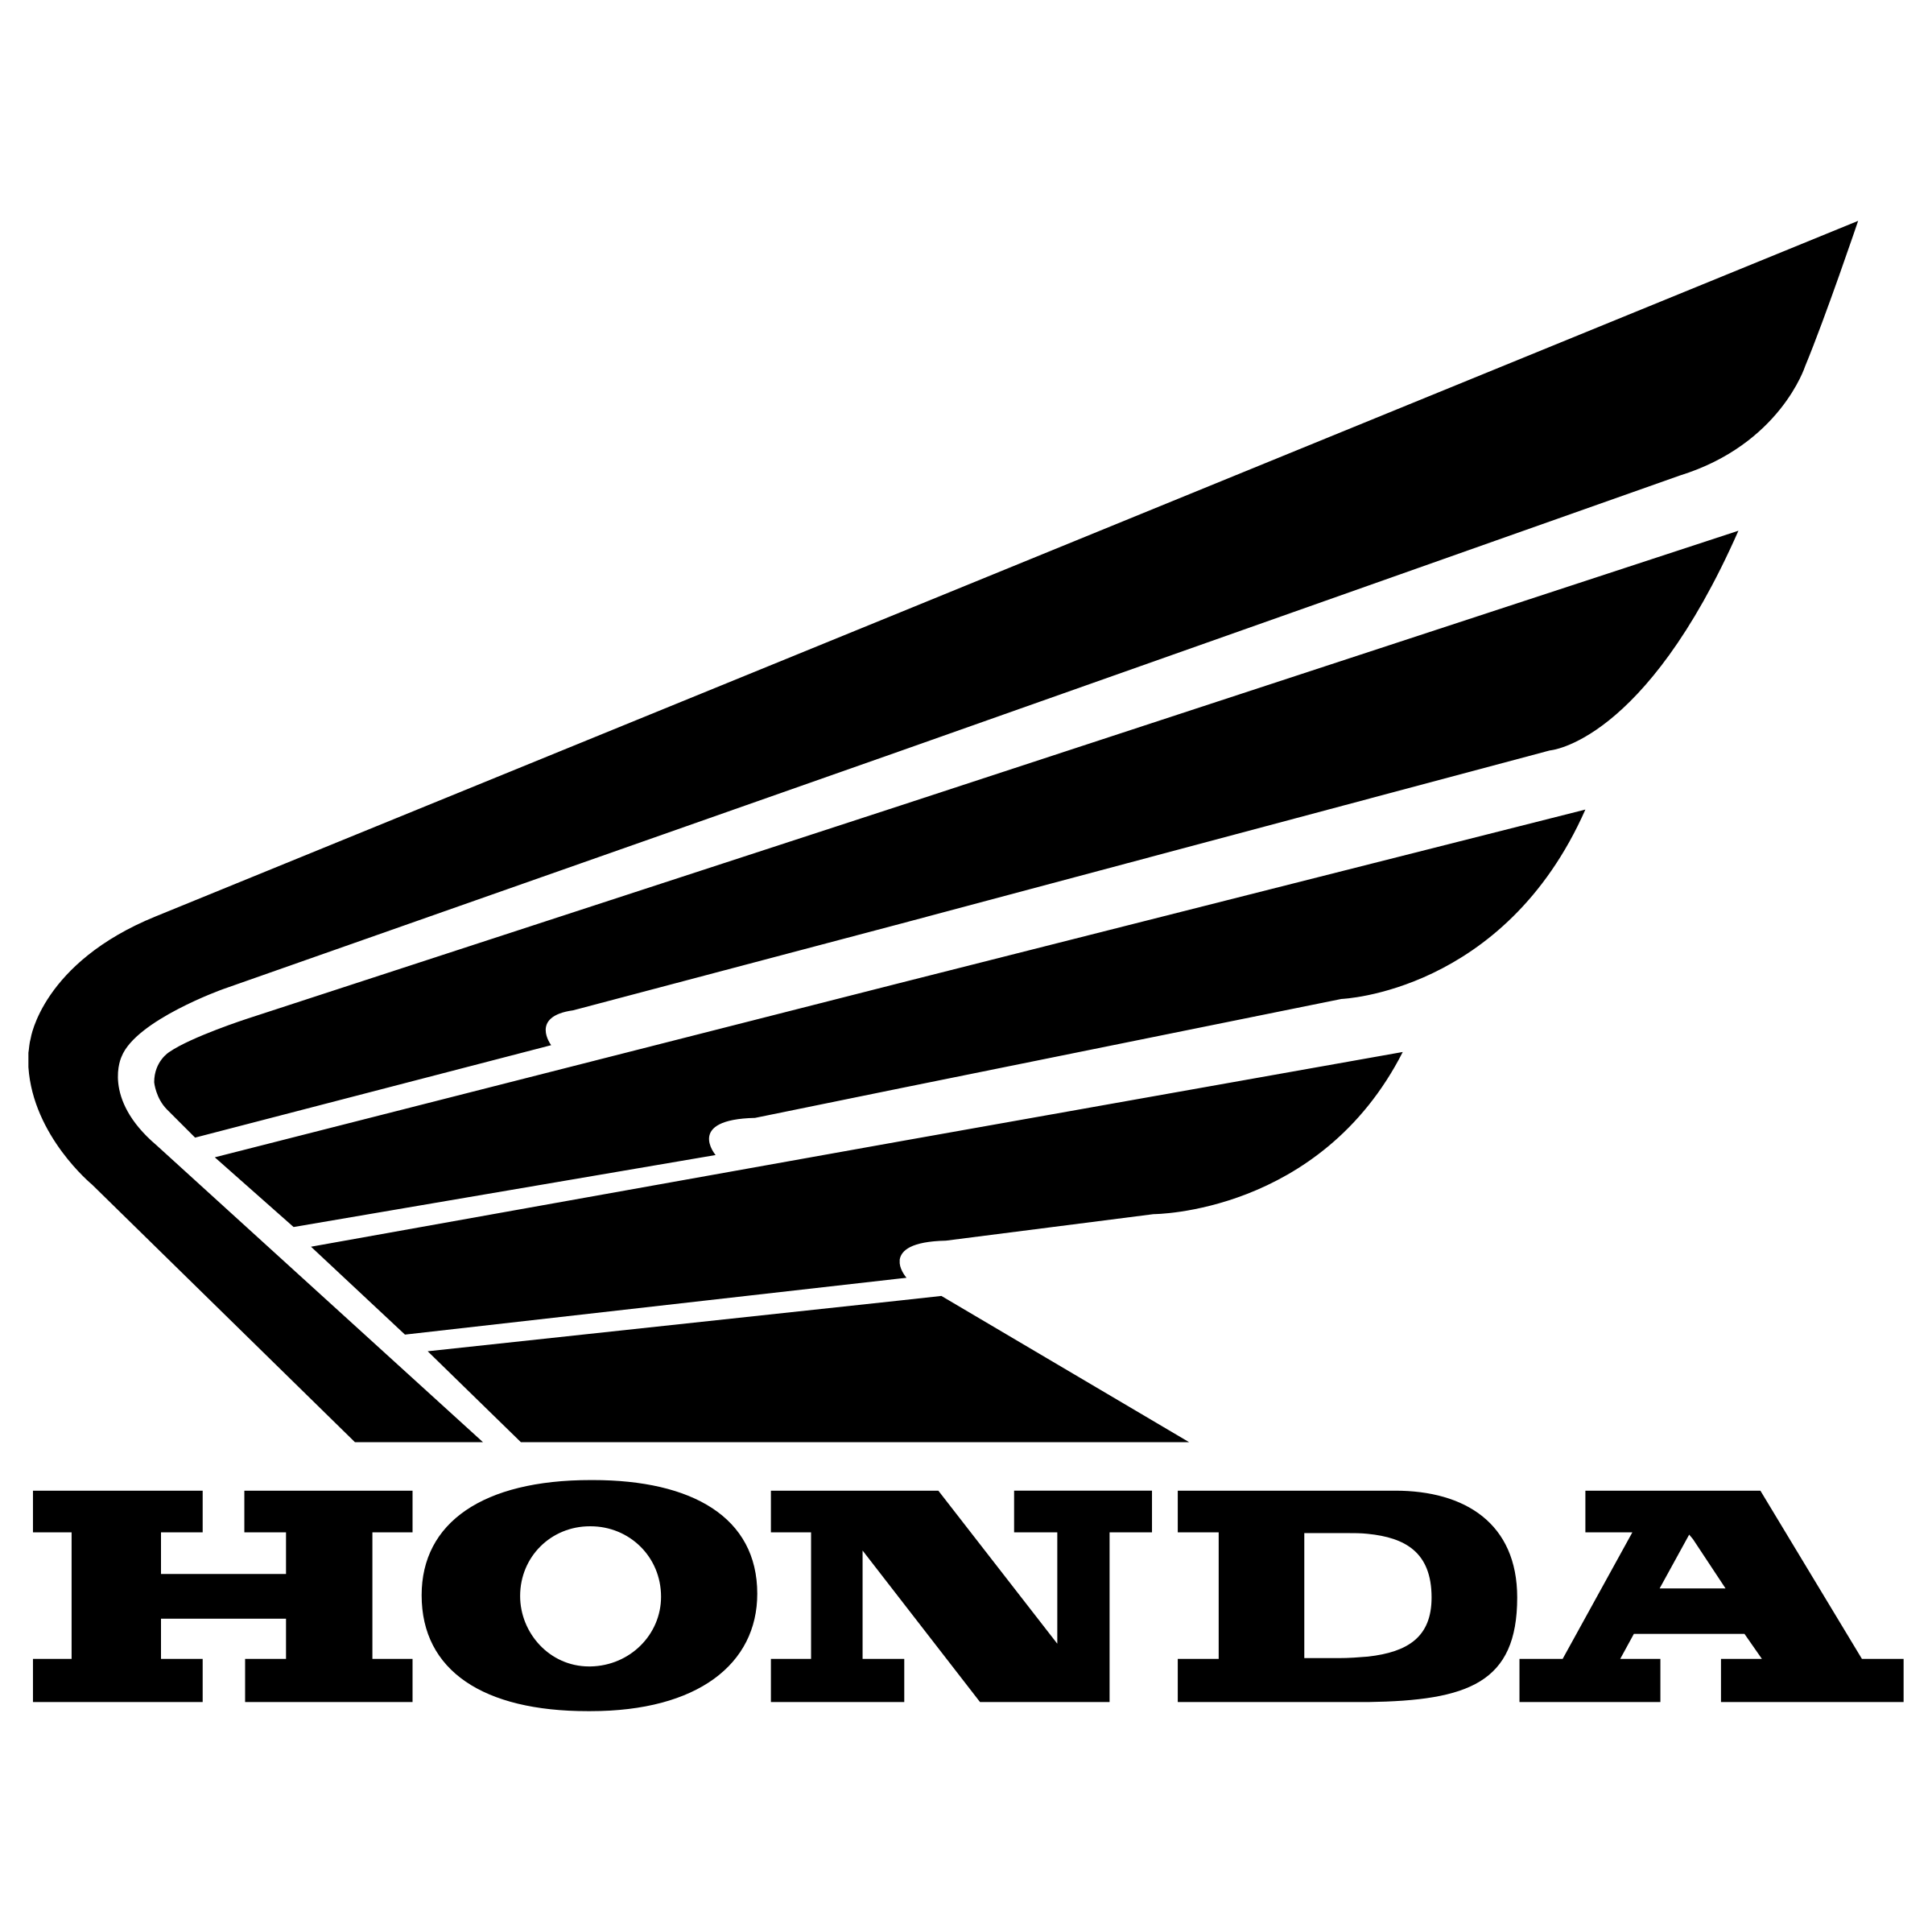 Black Honda Logo - Honda Logo PNG Transparent & SVG Vector - Freebie Supply